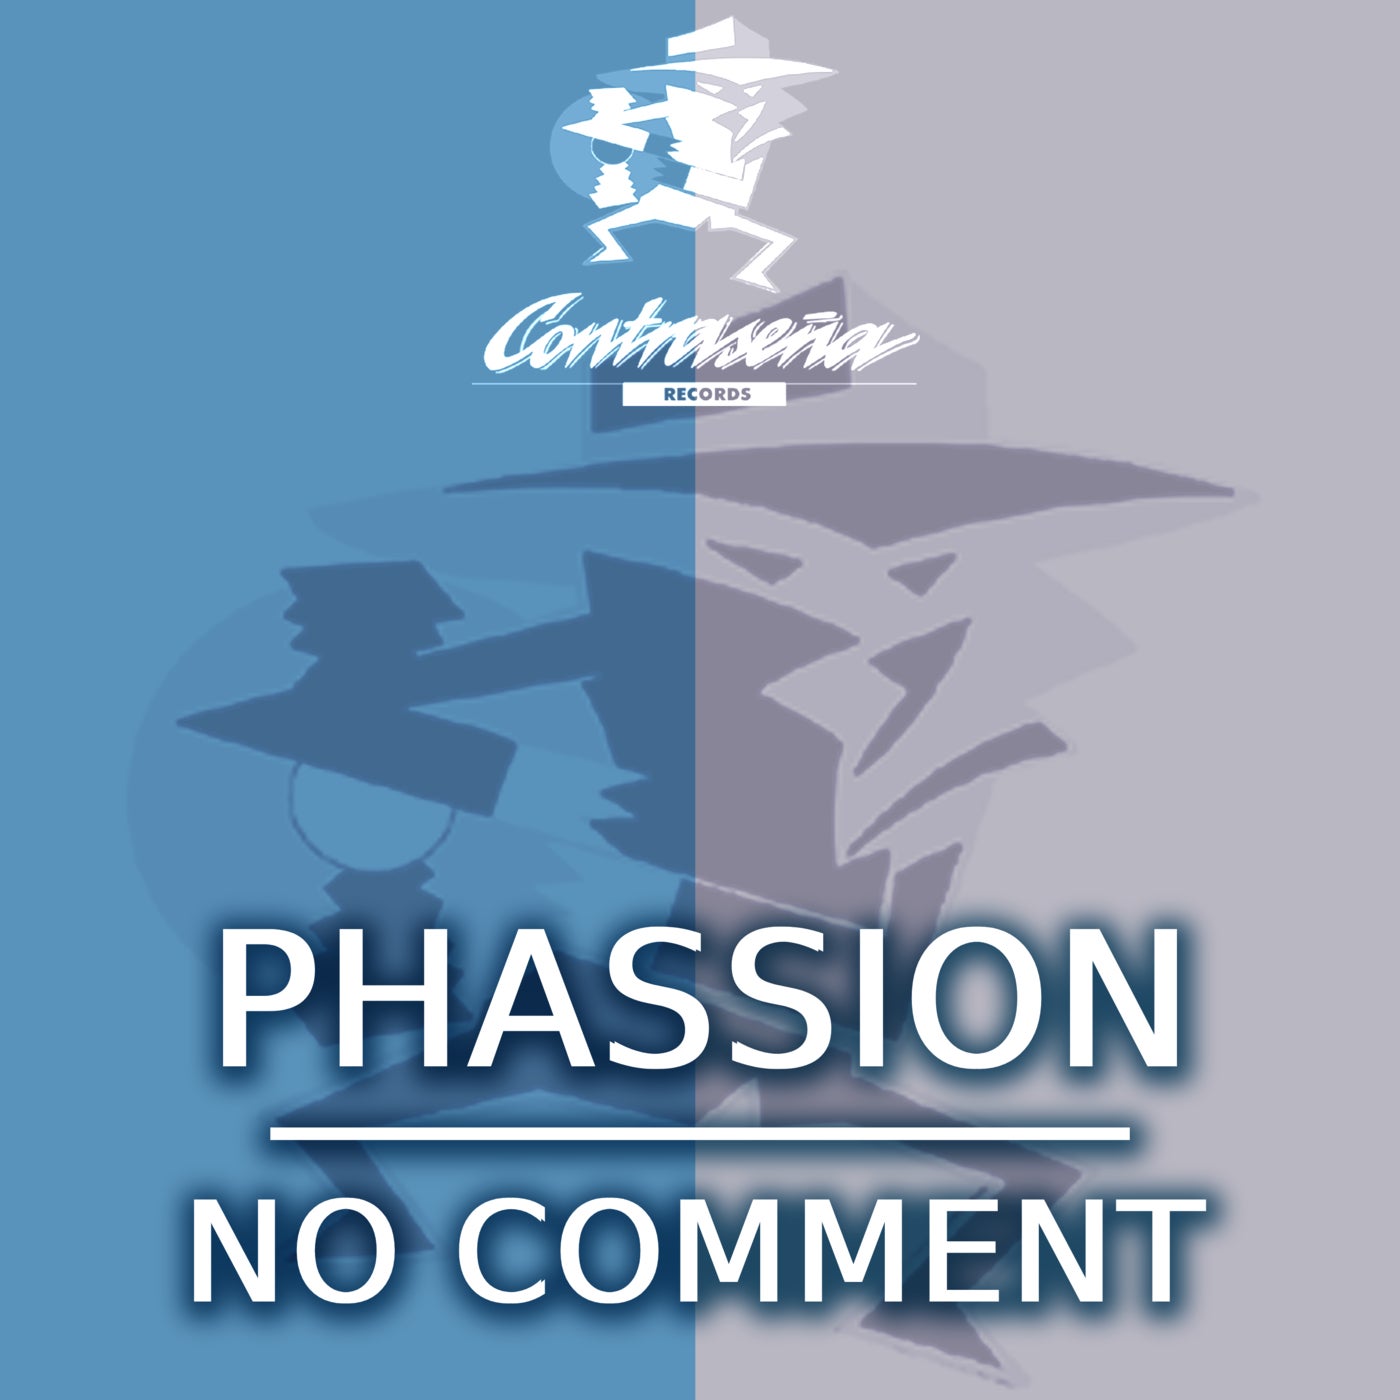 Phassion